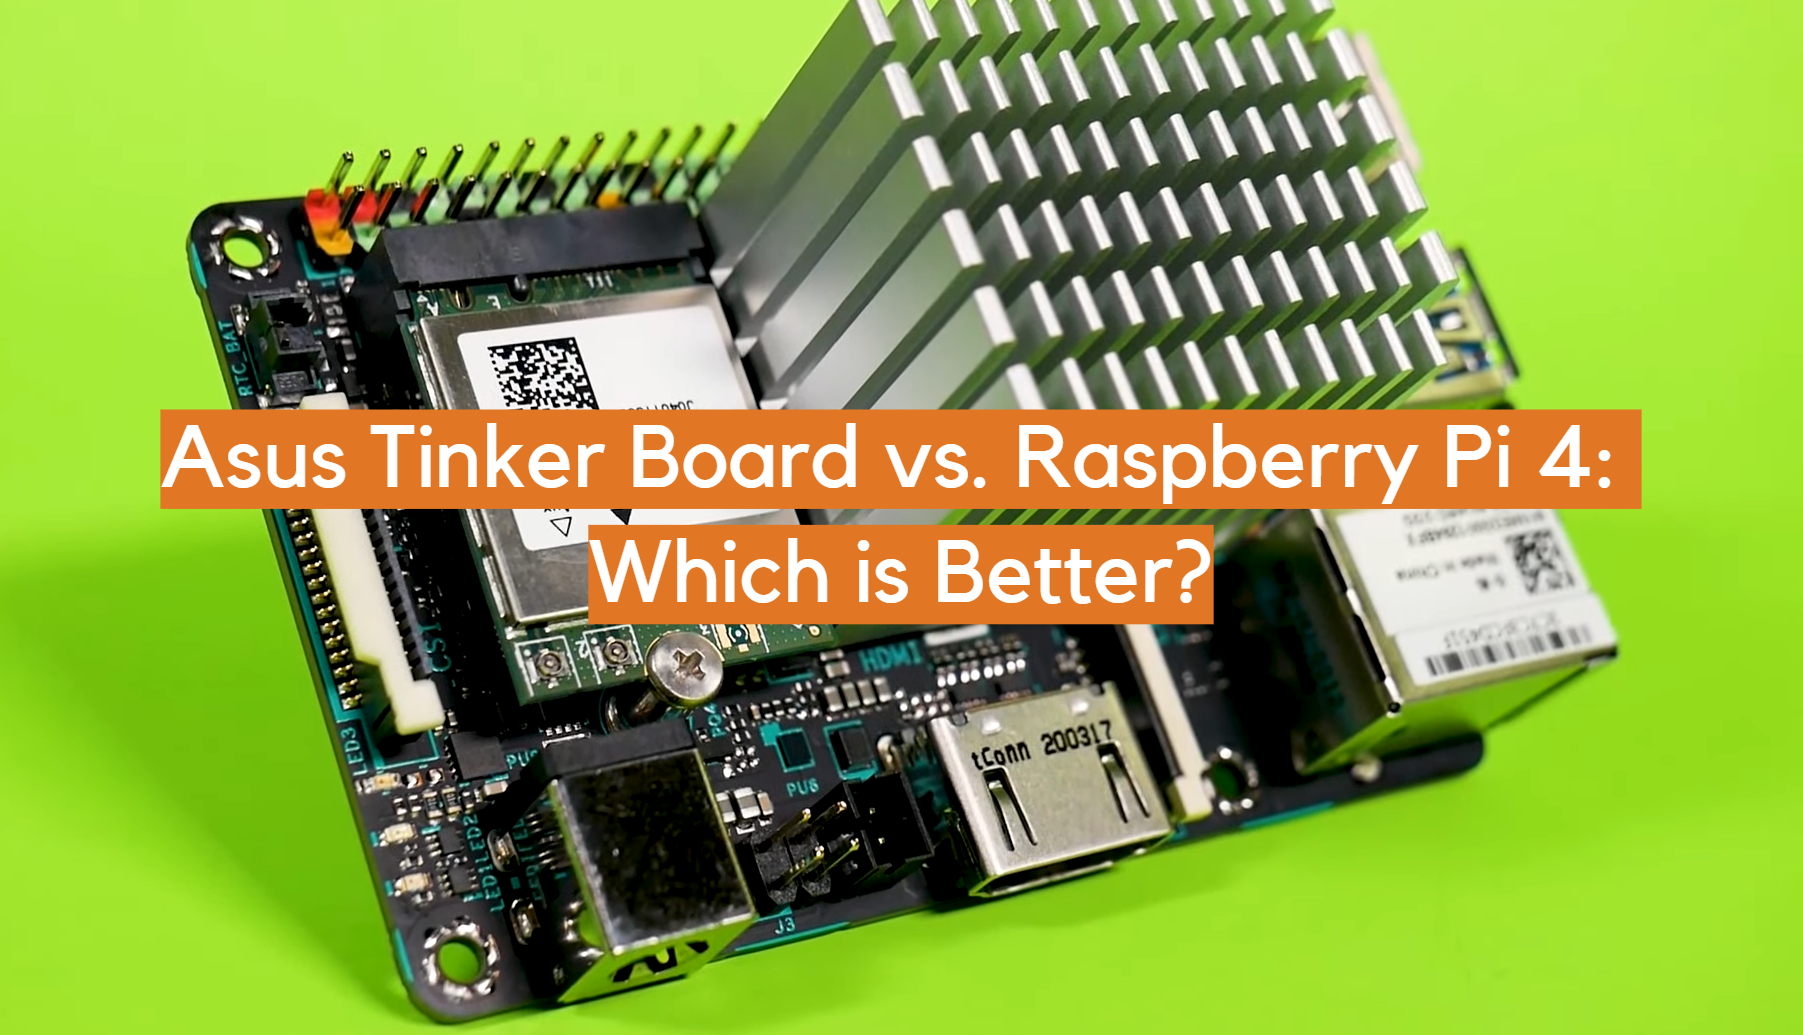 Asus Tinker Board vs. Raspberry Pi 4: ¿Cuál es mejor?